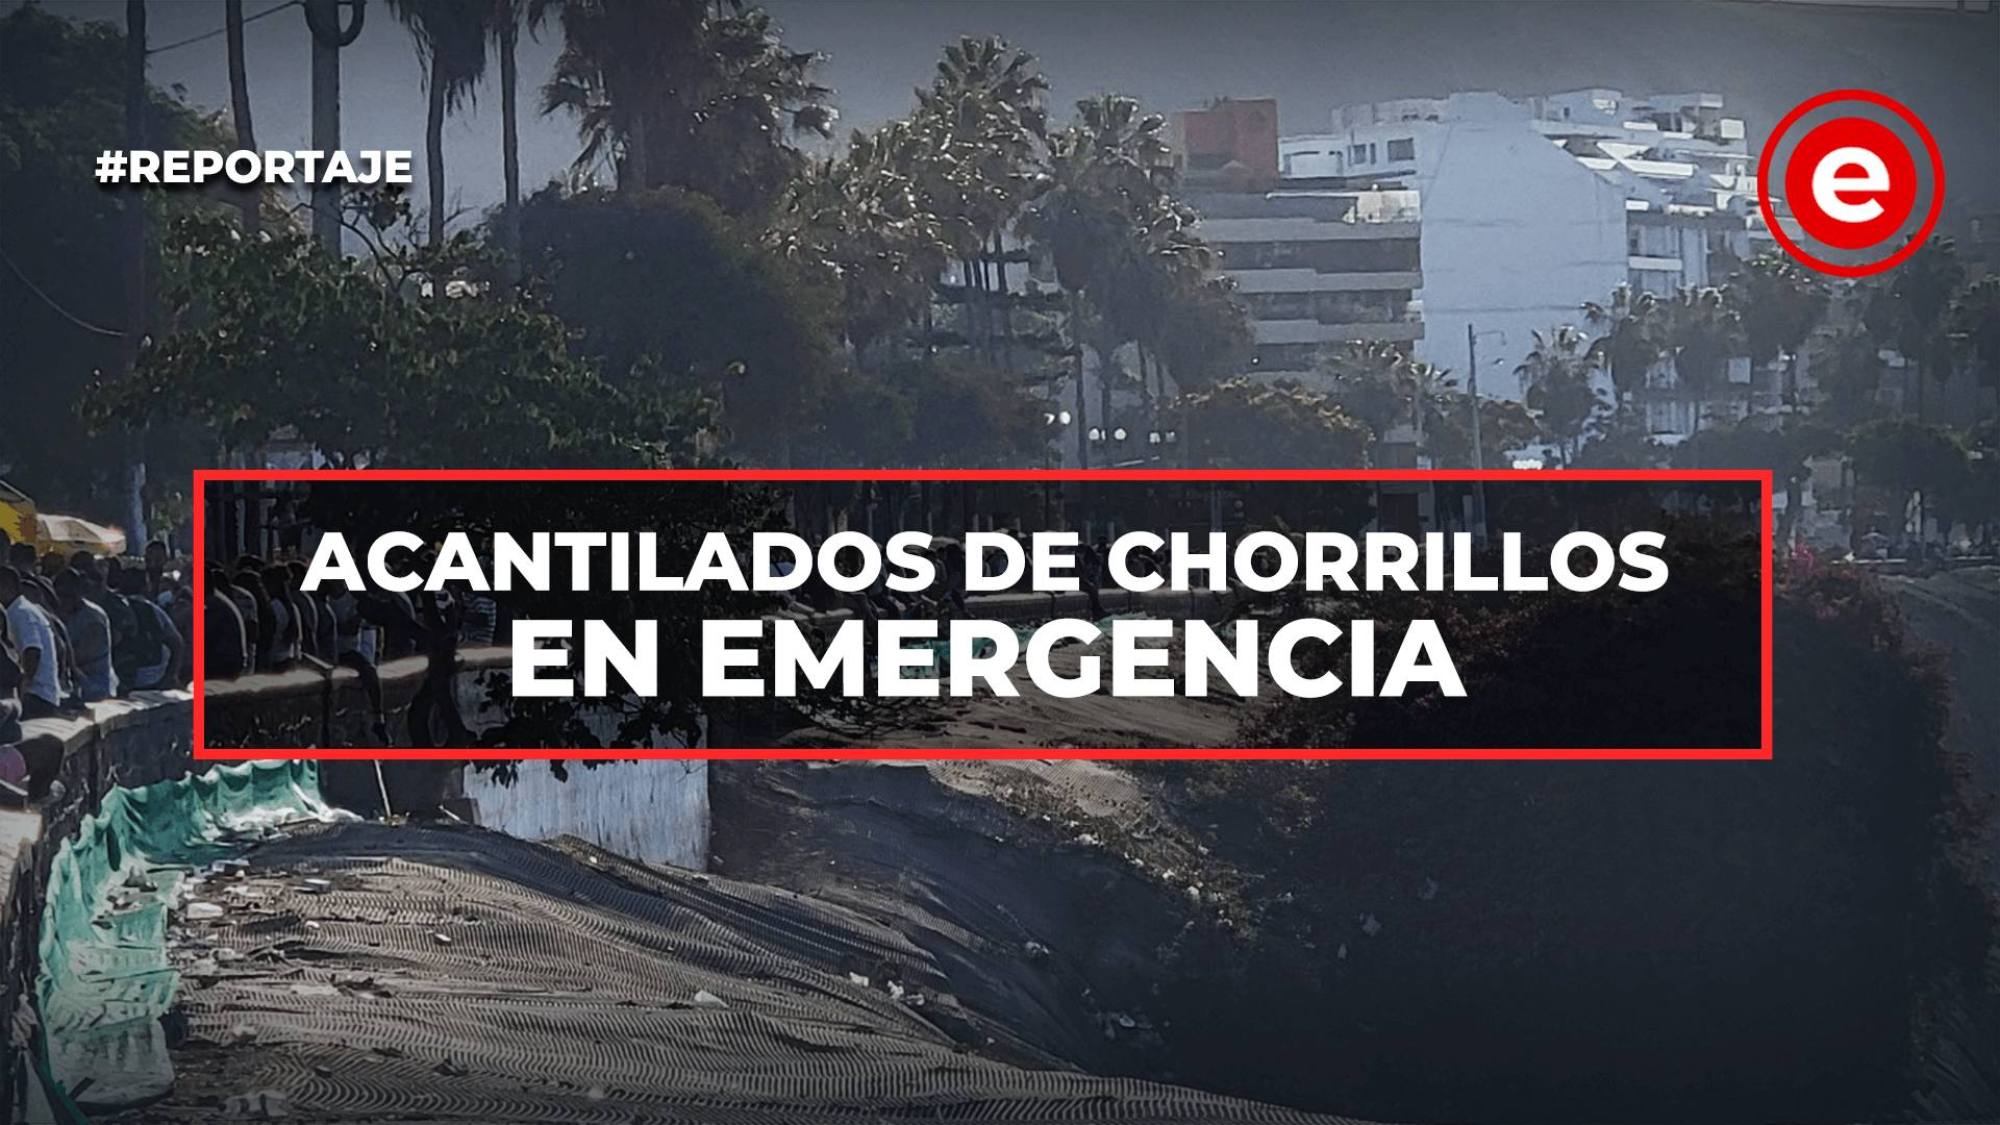 Acantilados de Chorrillos en emergencia, Epicentro TV